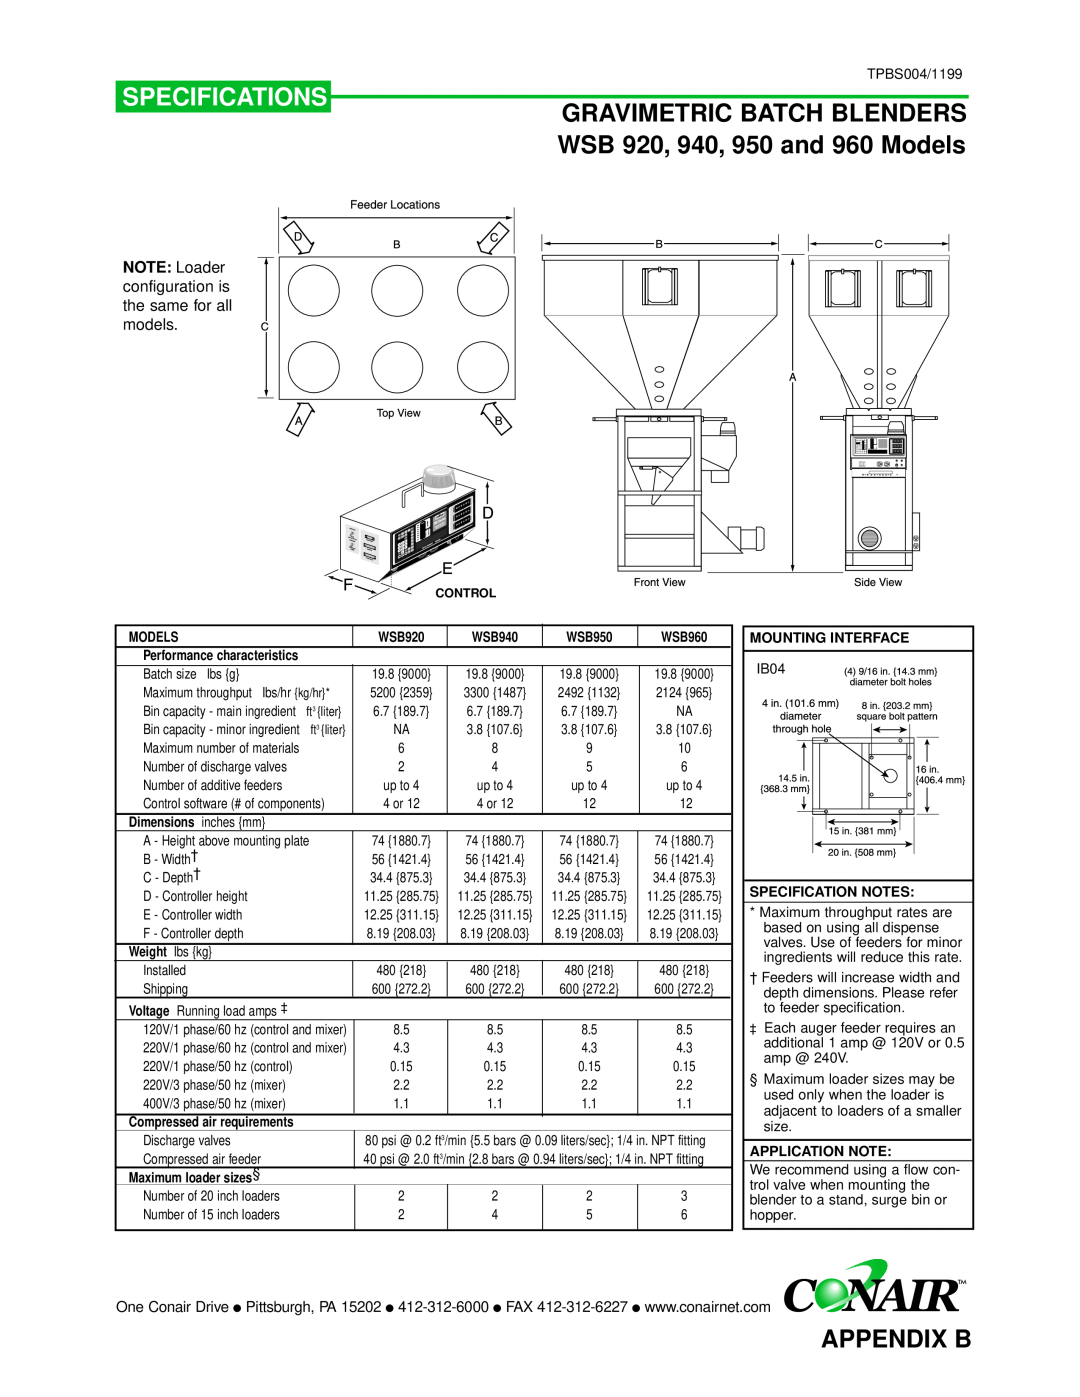 Conair GB manual Gravimetric Batch Blenders, WSB 920, 940, 950 and 960 Models, Specifications, Appendix B 